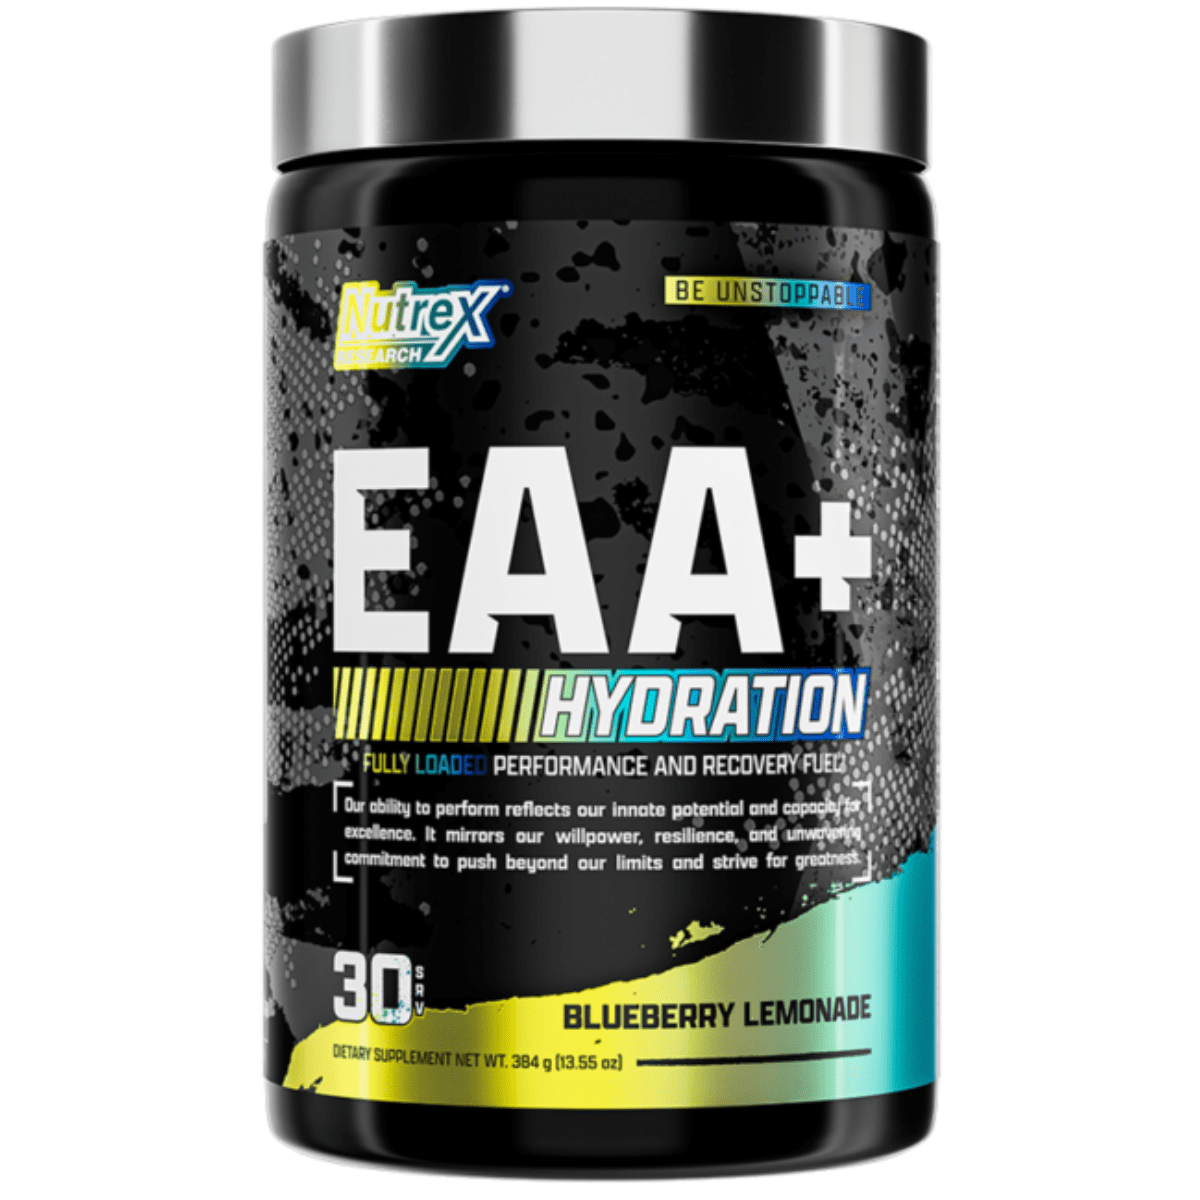 Nutrex EAA+ Hydration - 3